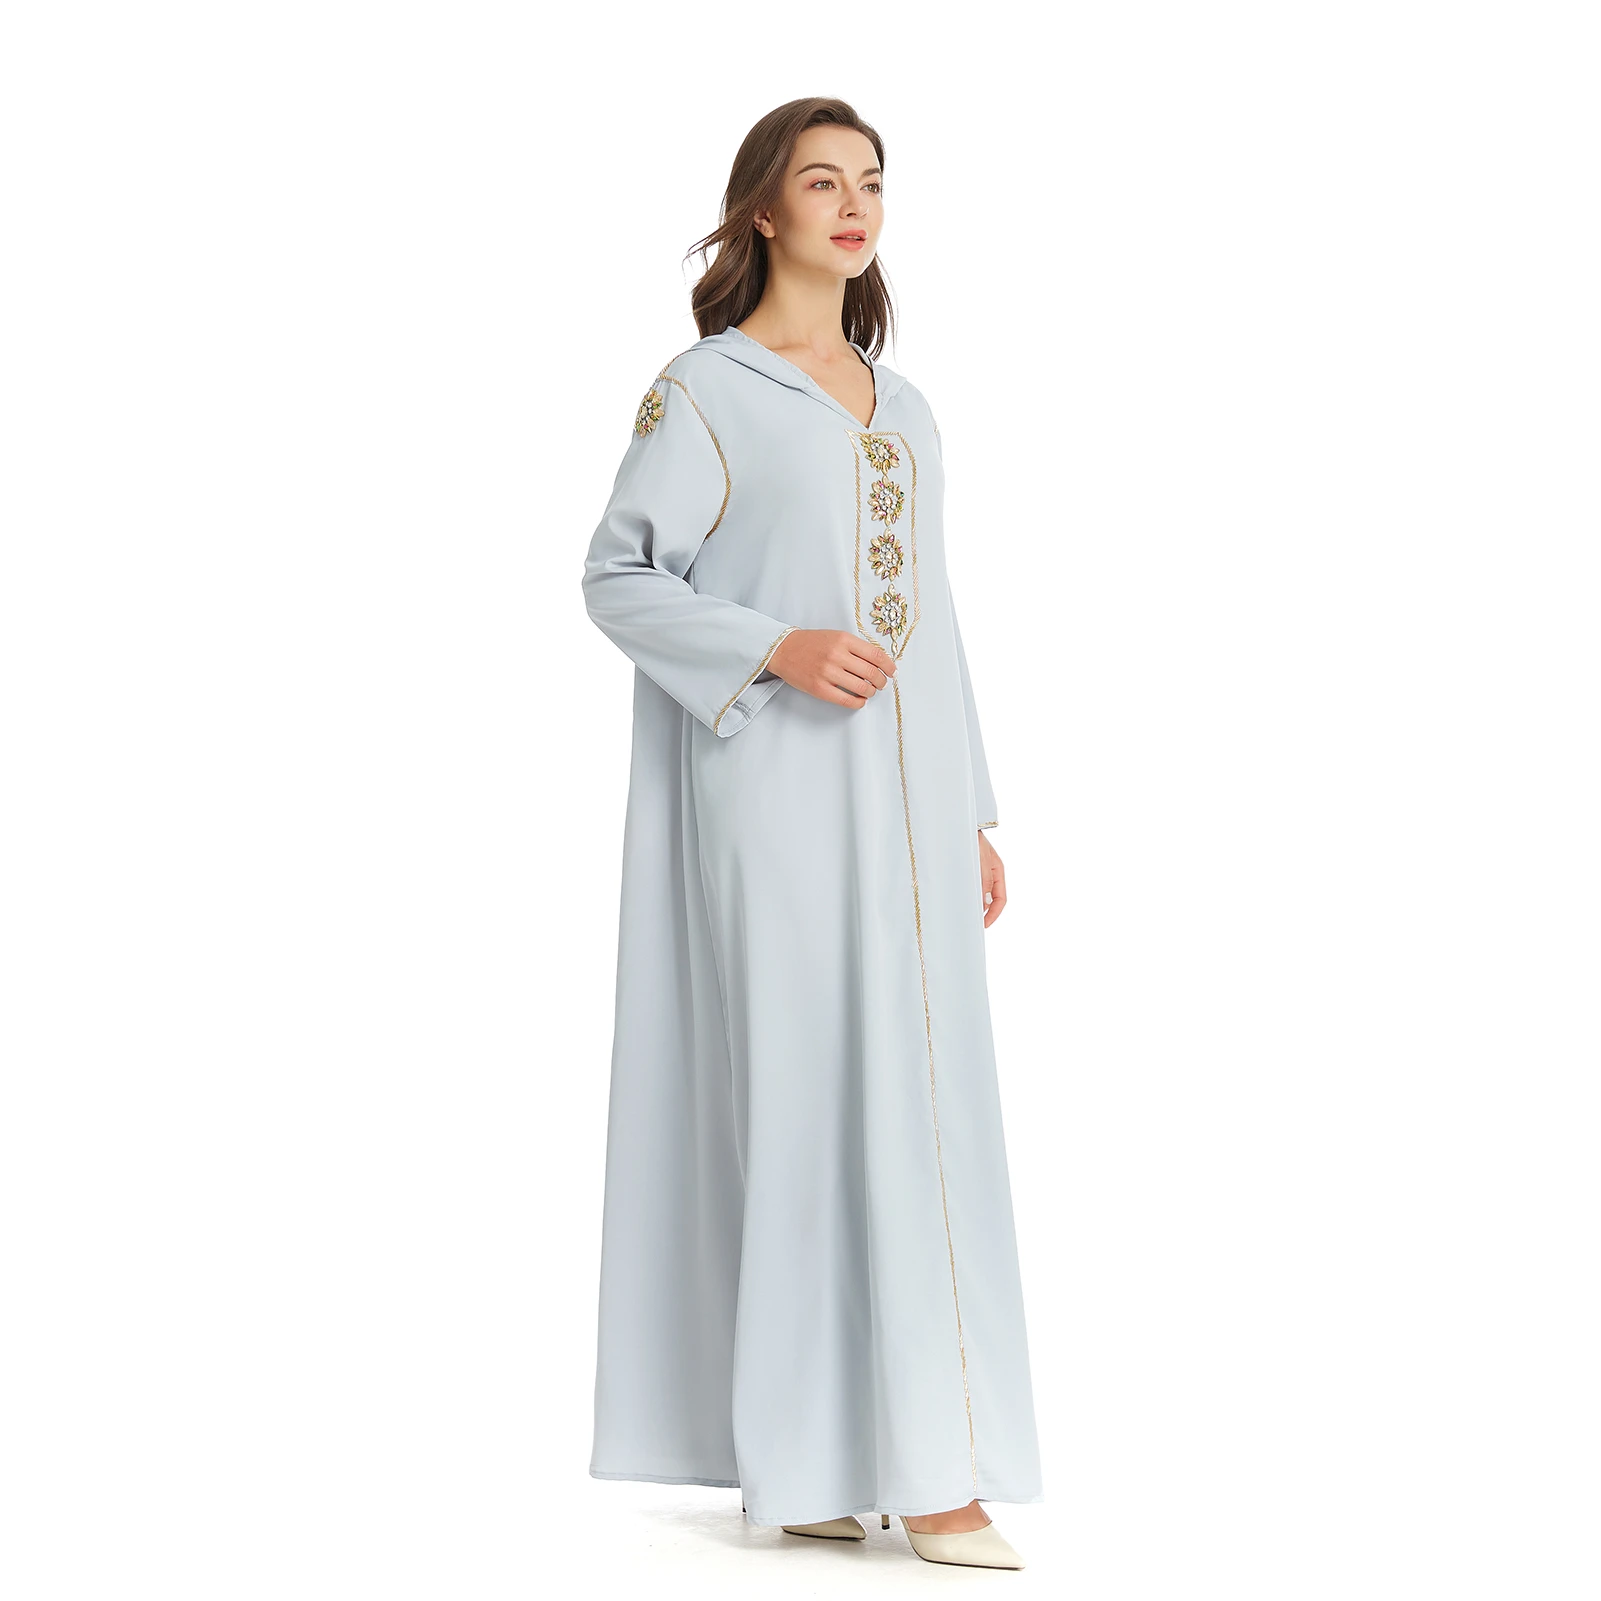 Abayas Dubai Solid Print Islamic+Clothing Hot Sale Prayer Muslim Dresses Unique Kaftan Abaya